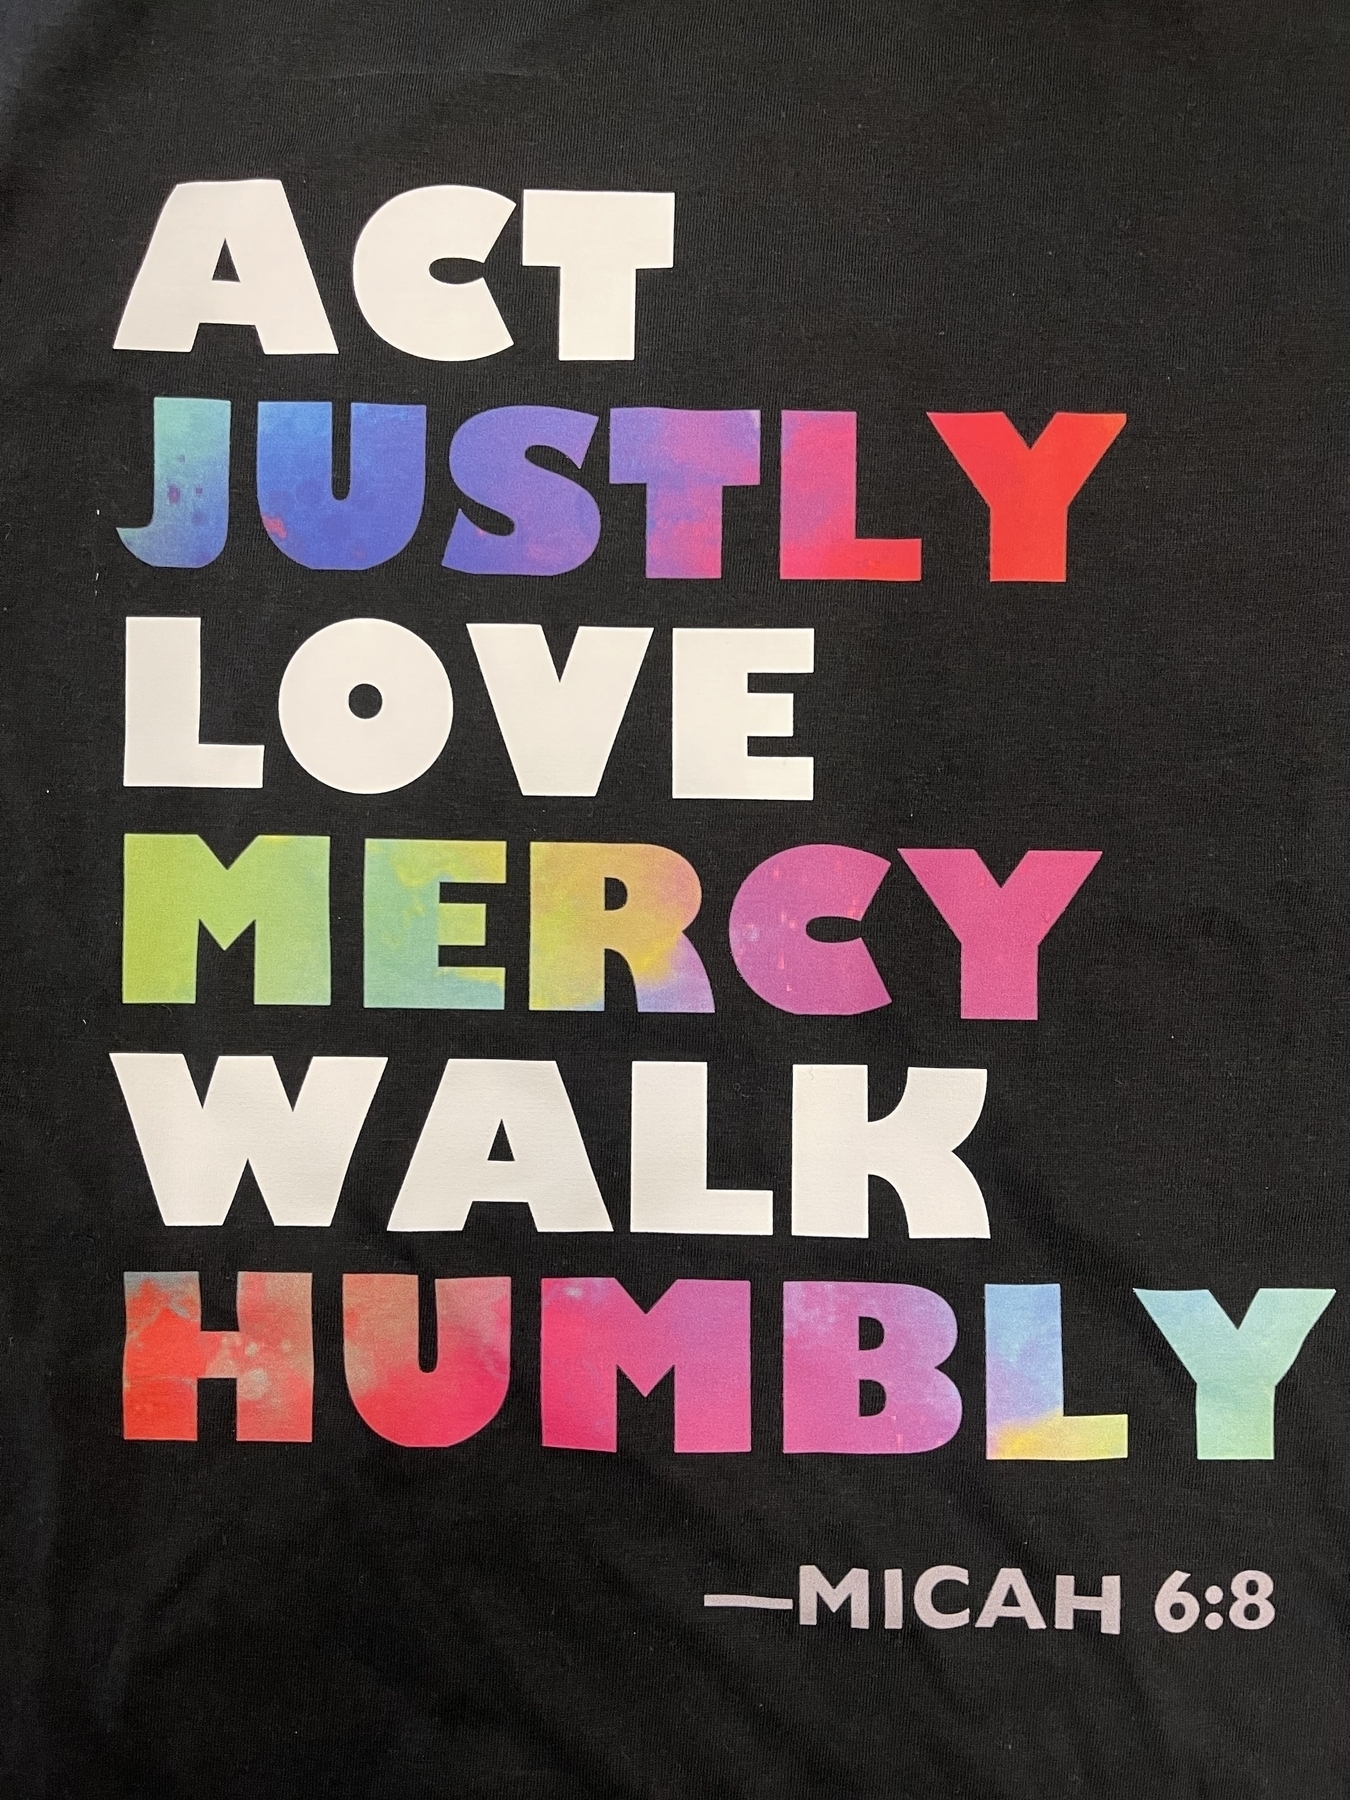 Act justly, love mercy, walk humbly. Micah 6:8